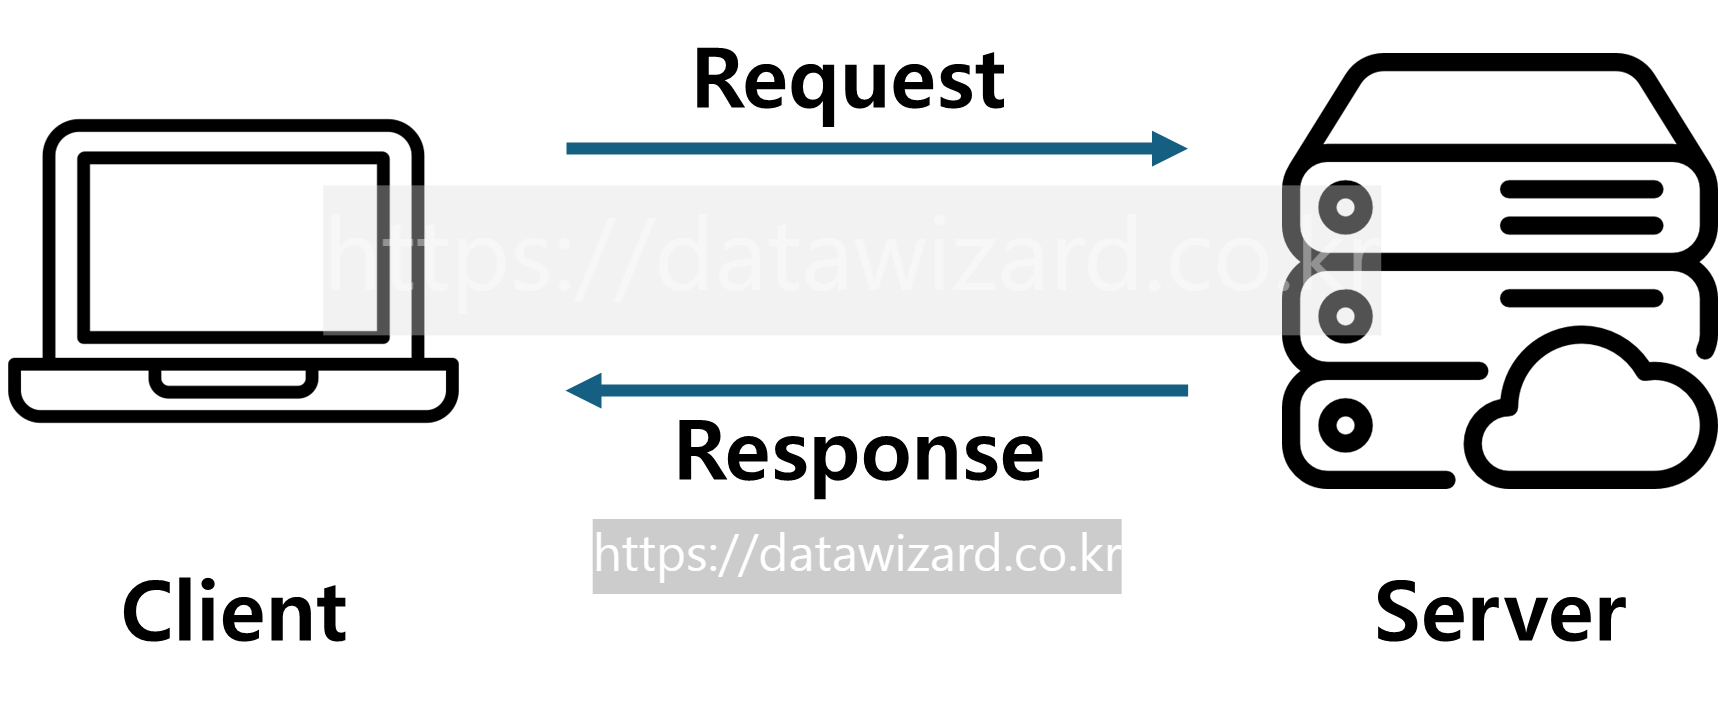 Client 와 Server의 상호 통신 개념도@Datawizard.co.kr